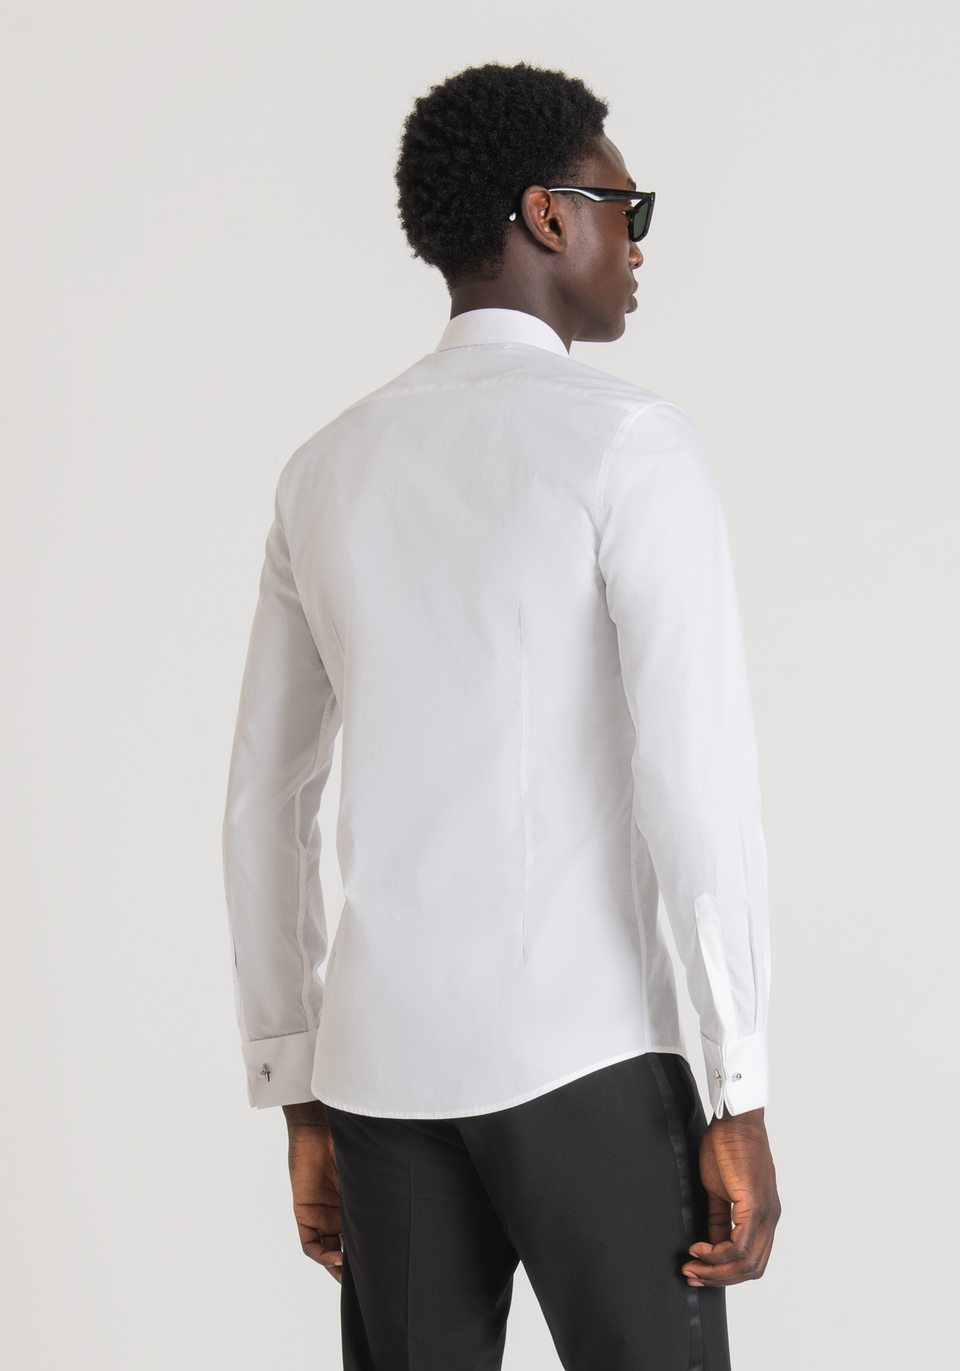 Shirt with cuff links - Antony Morato Online Shop